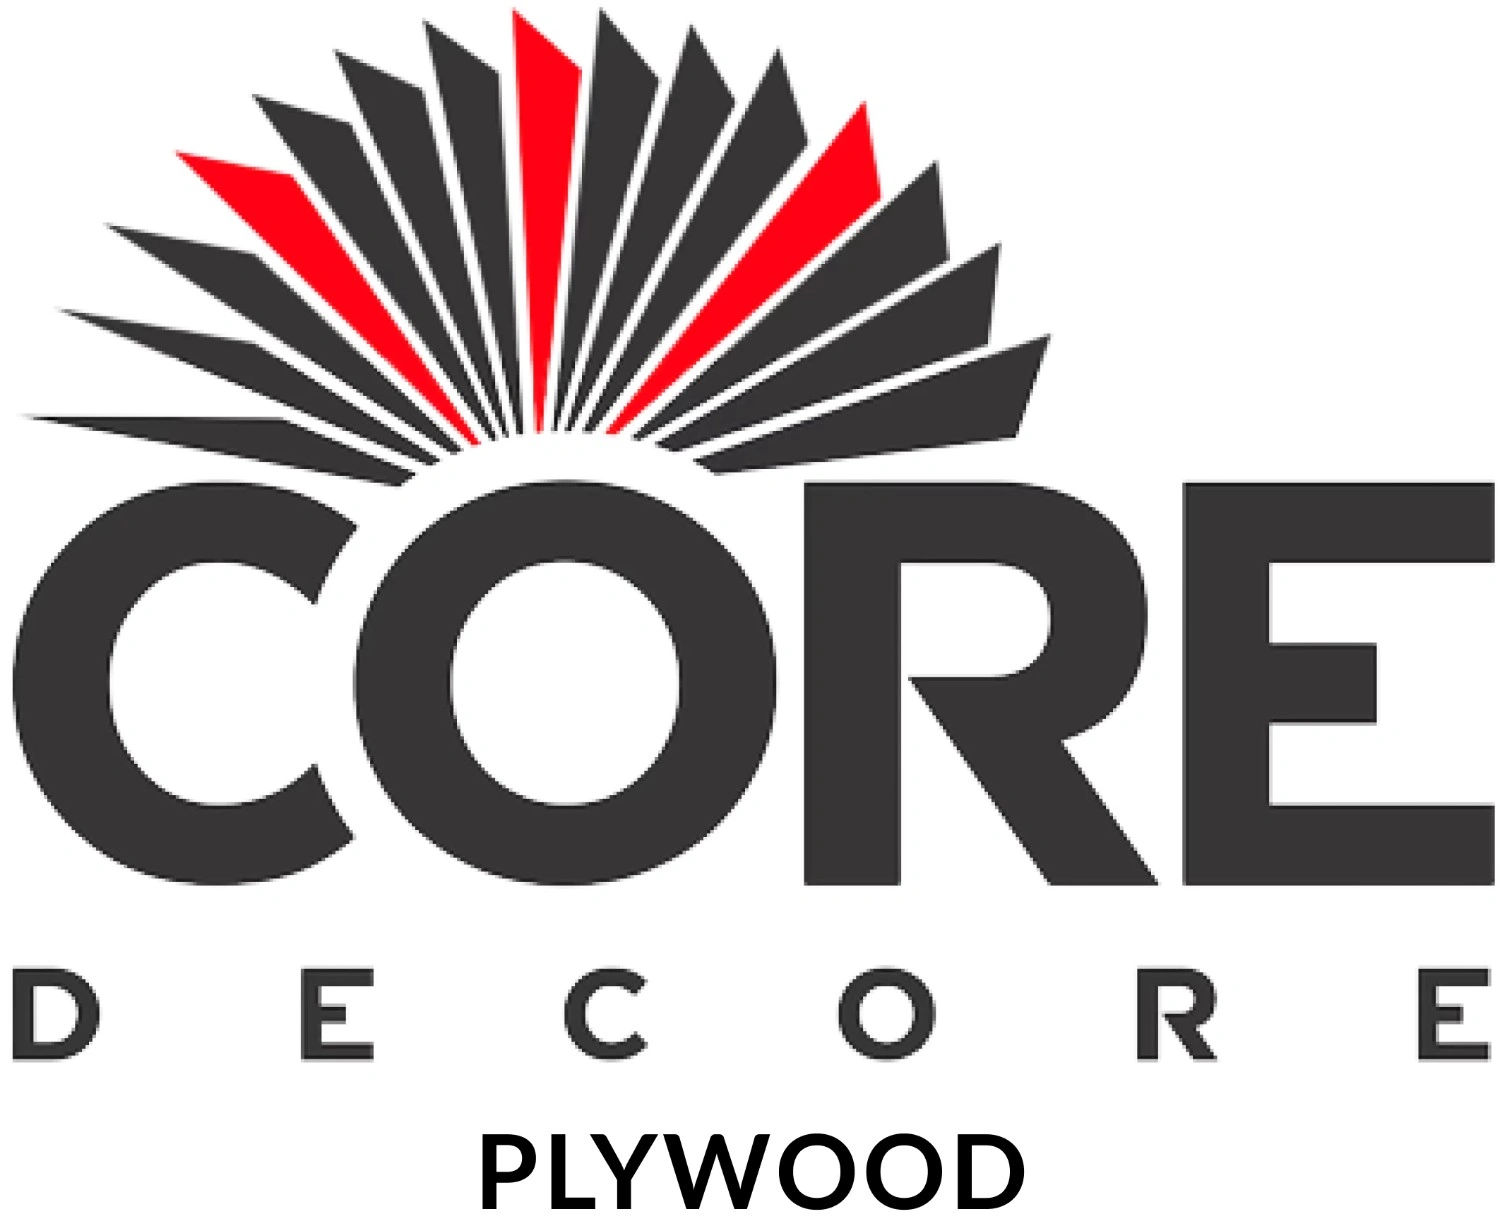 Chopra groups core decore logo